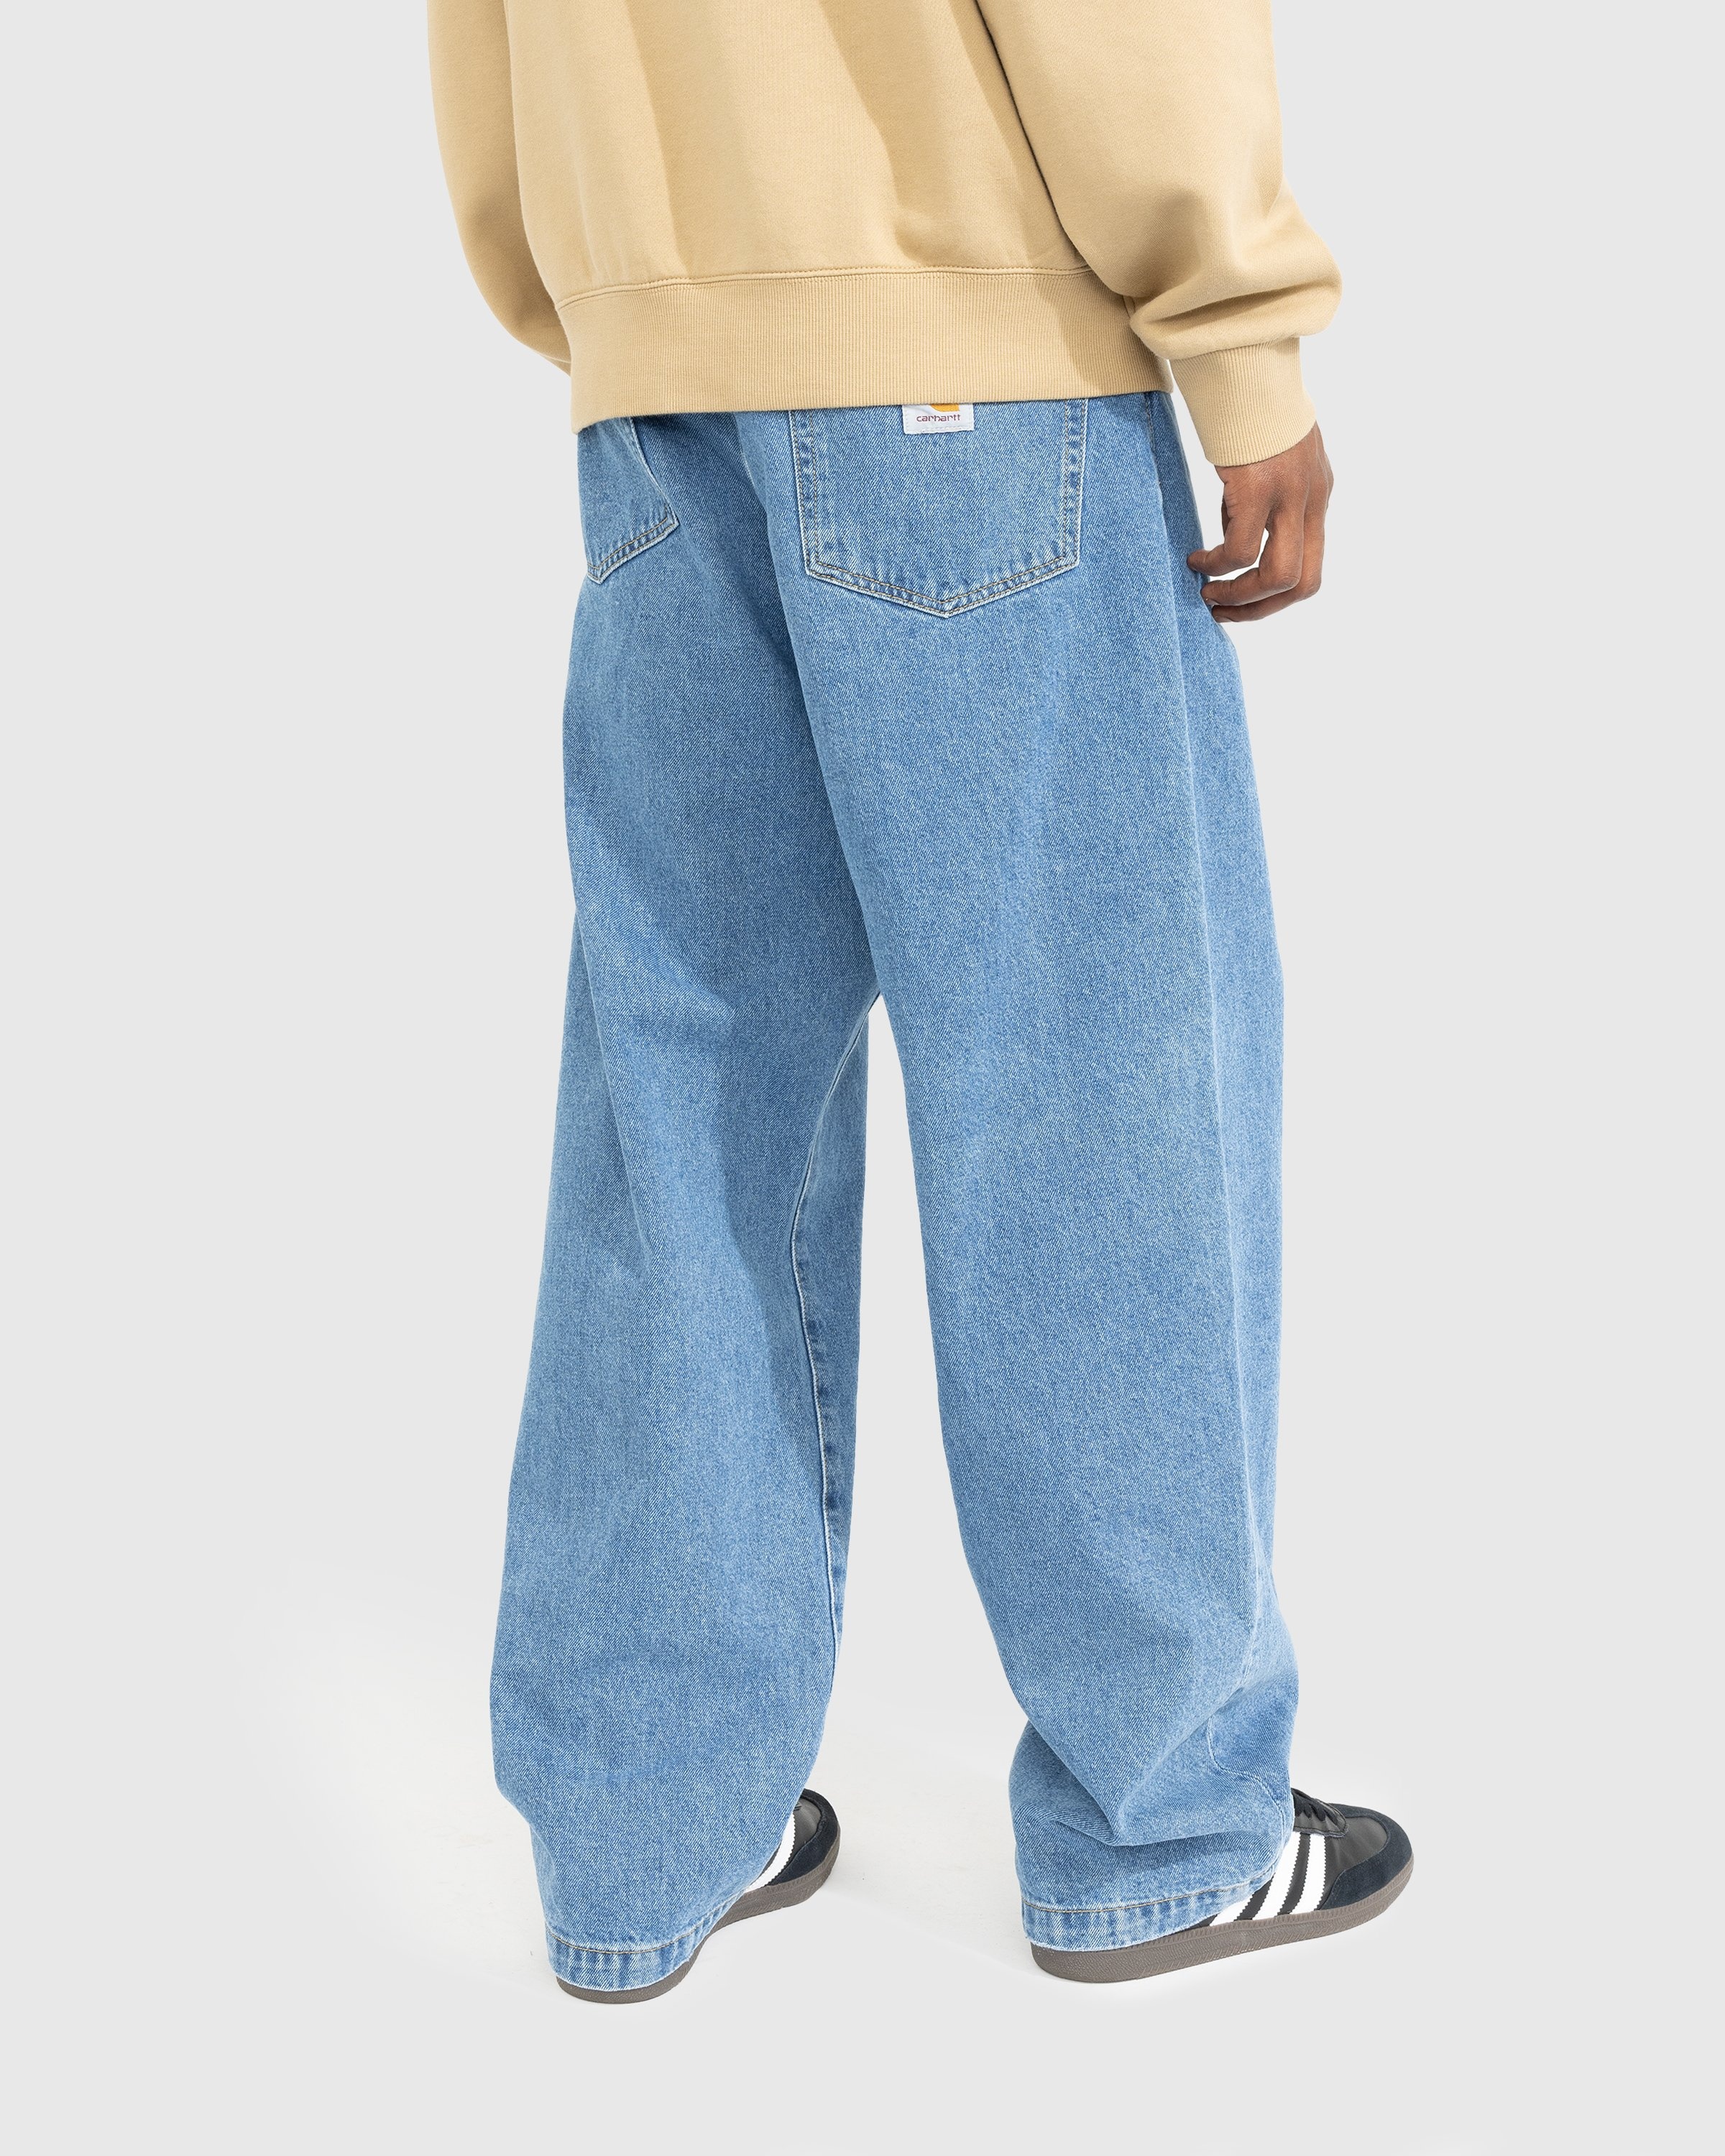 Carhartt WIP - Landon Pant Stone Washed Black - Jeans